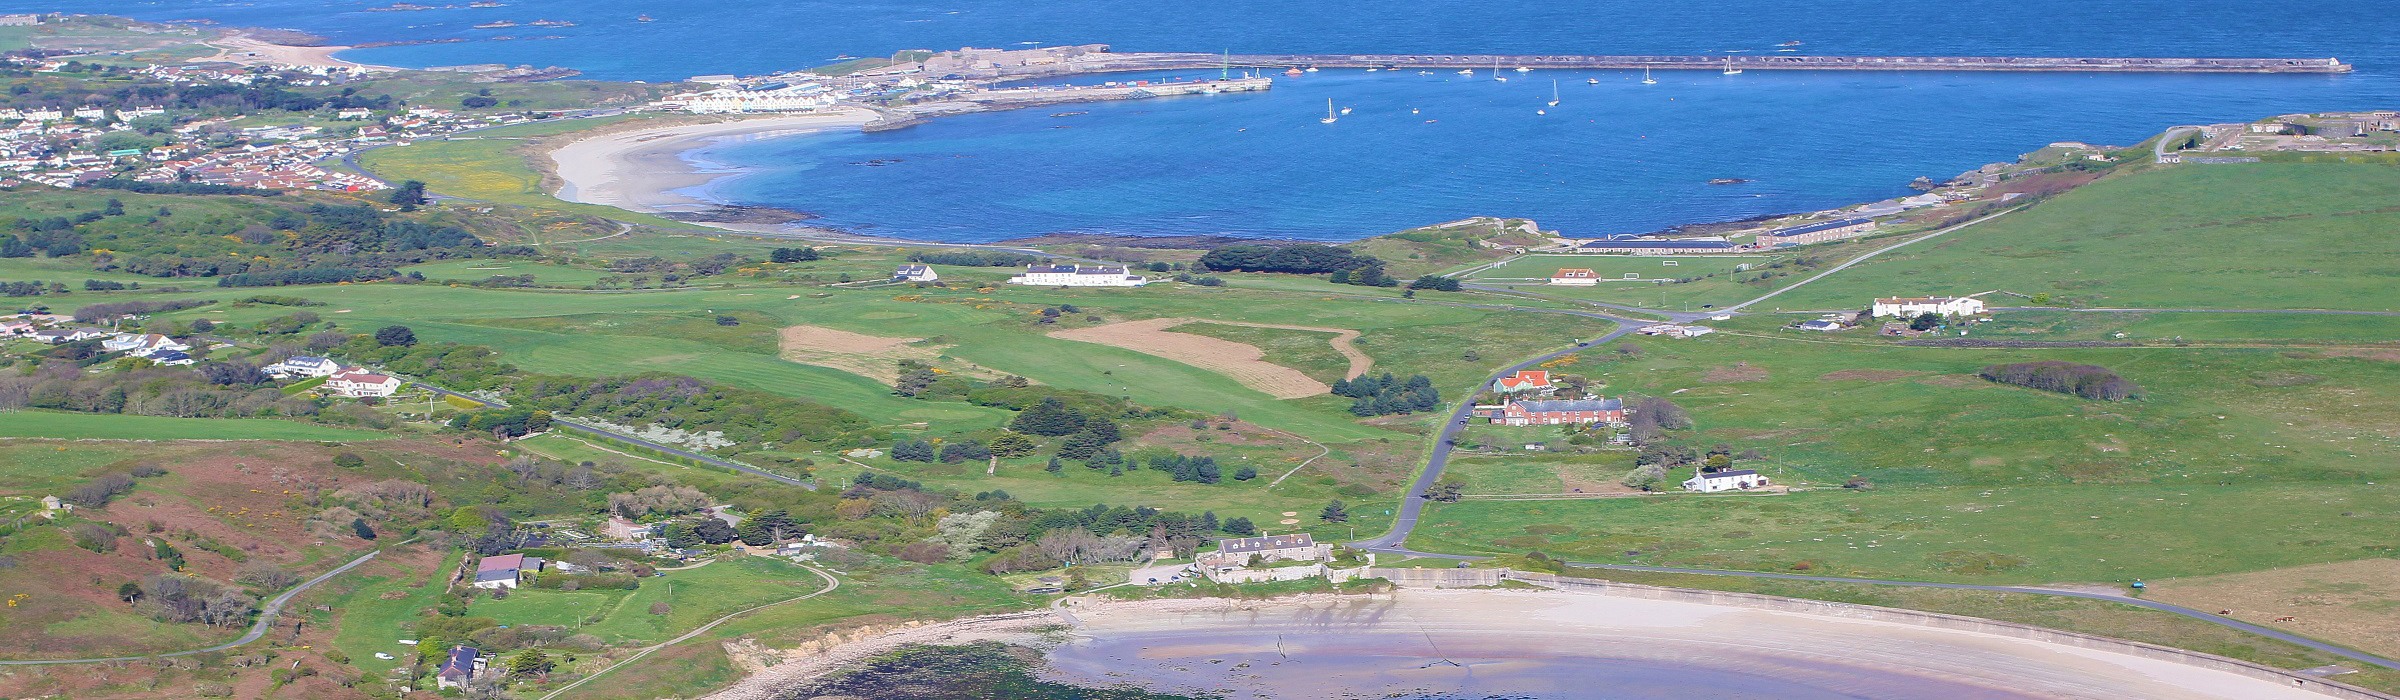 Aerial view of Alderney